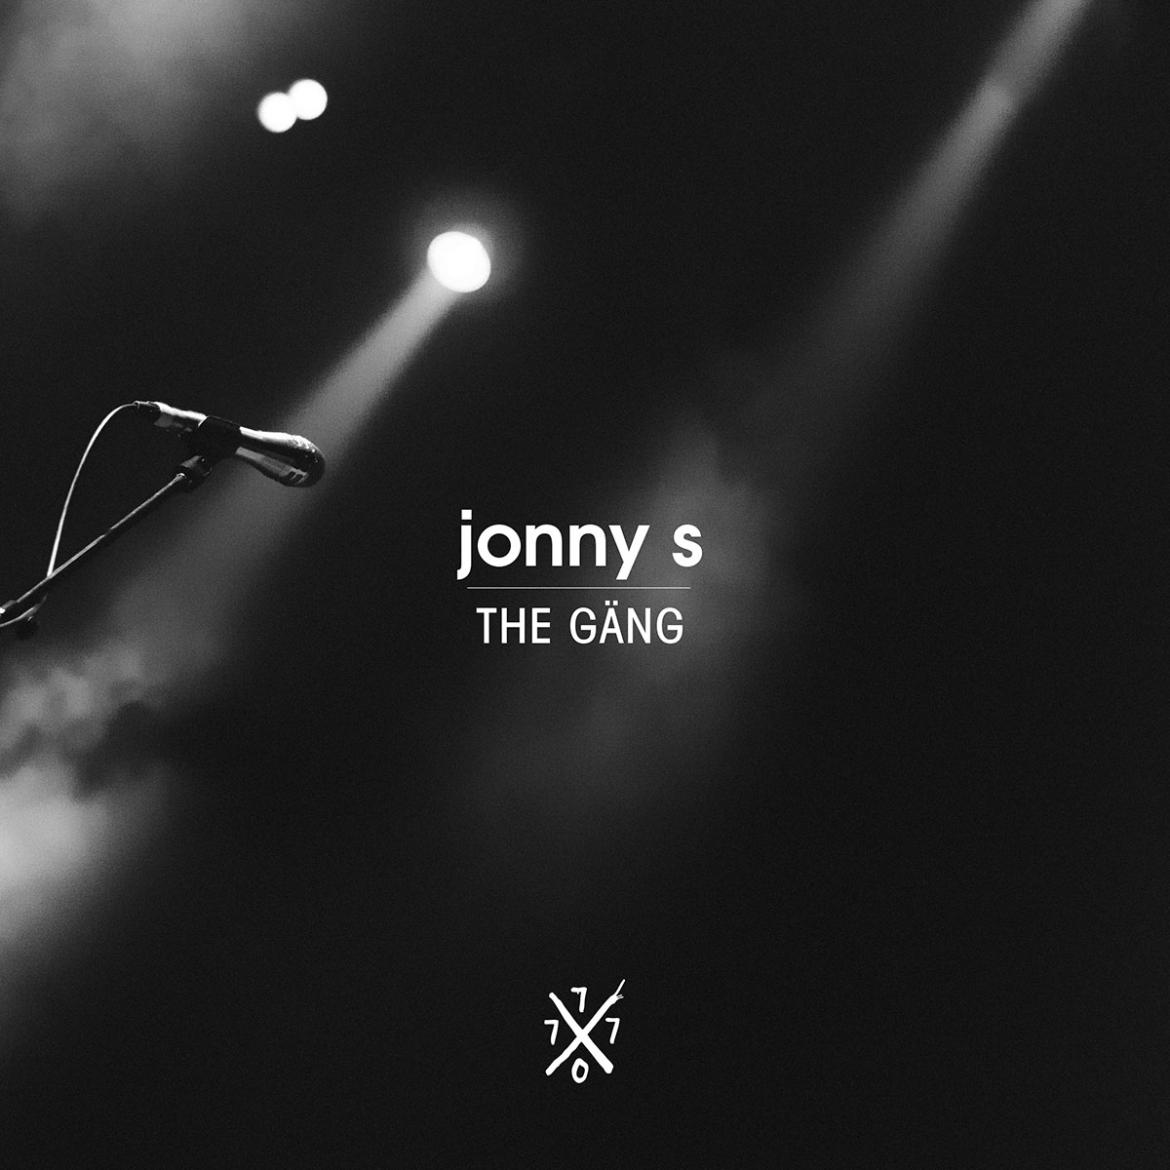 Jonny S - The Gäng Cover